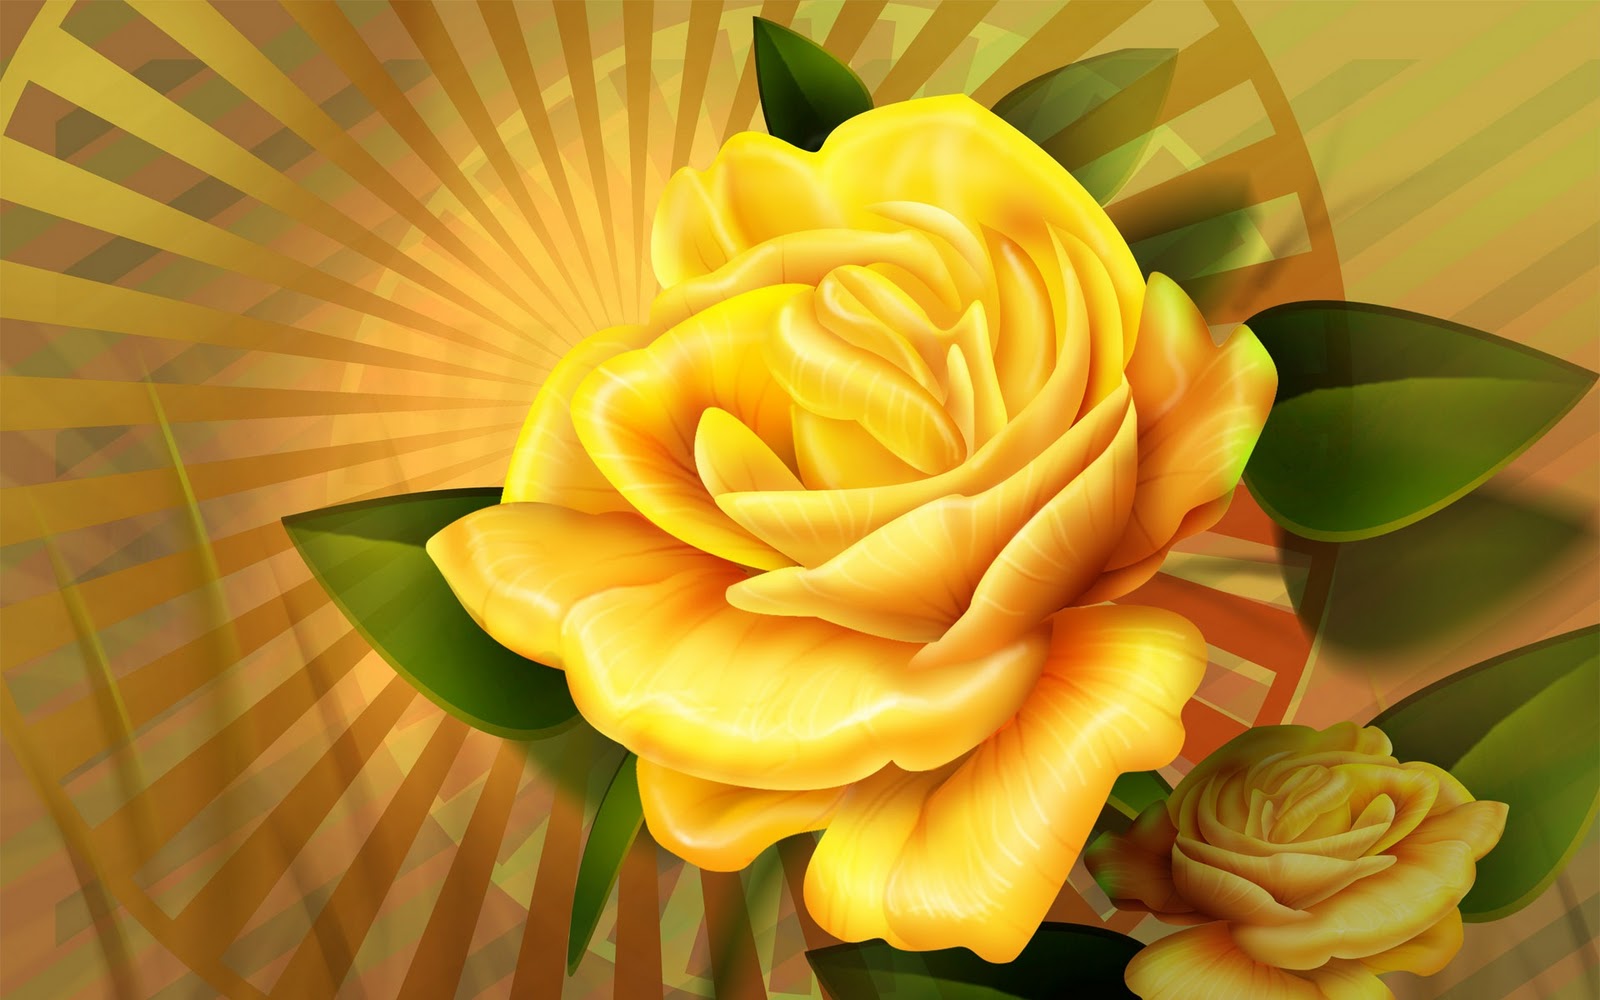  big rose on background sun, download photo, wallpapers for desktop